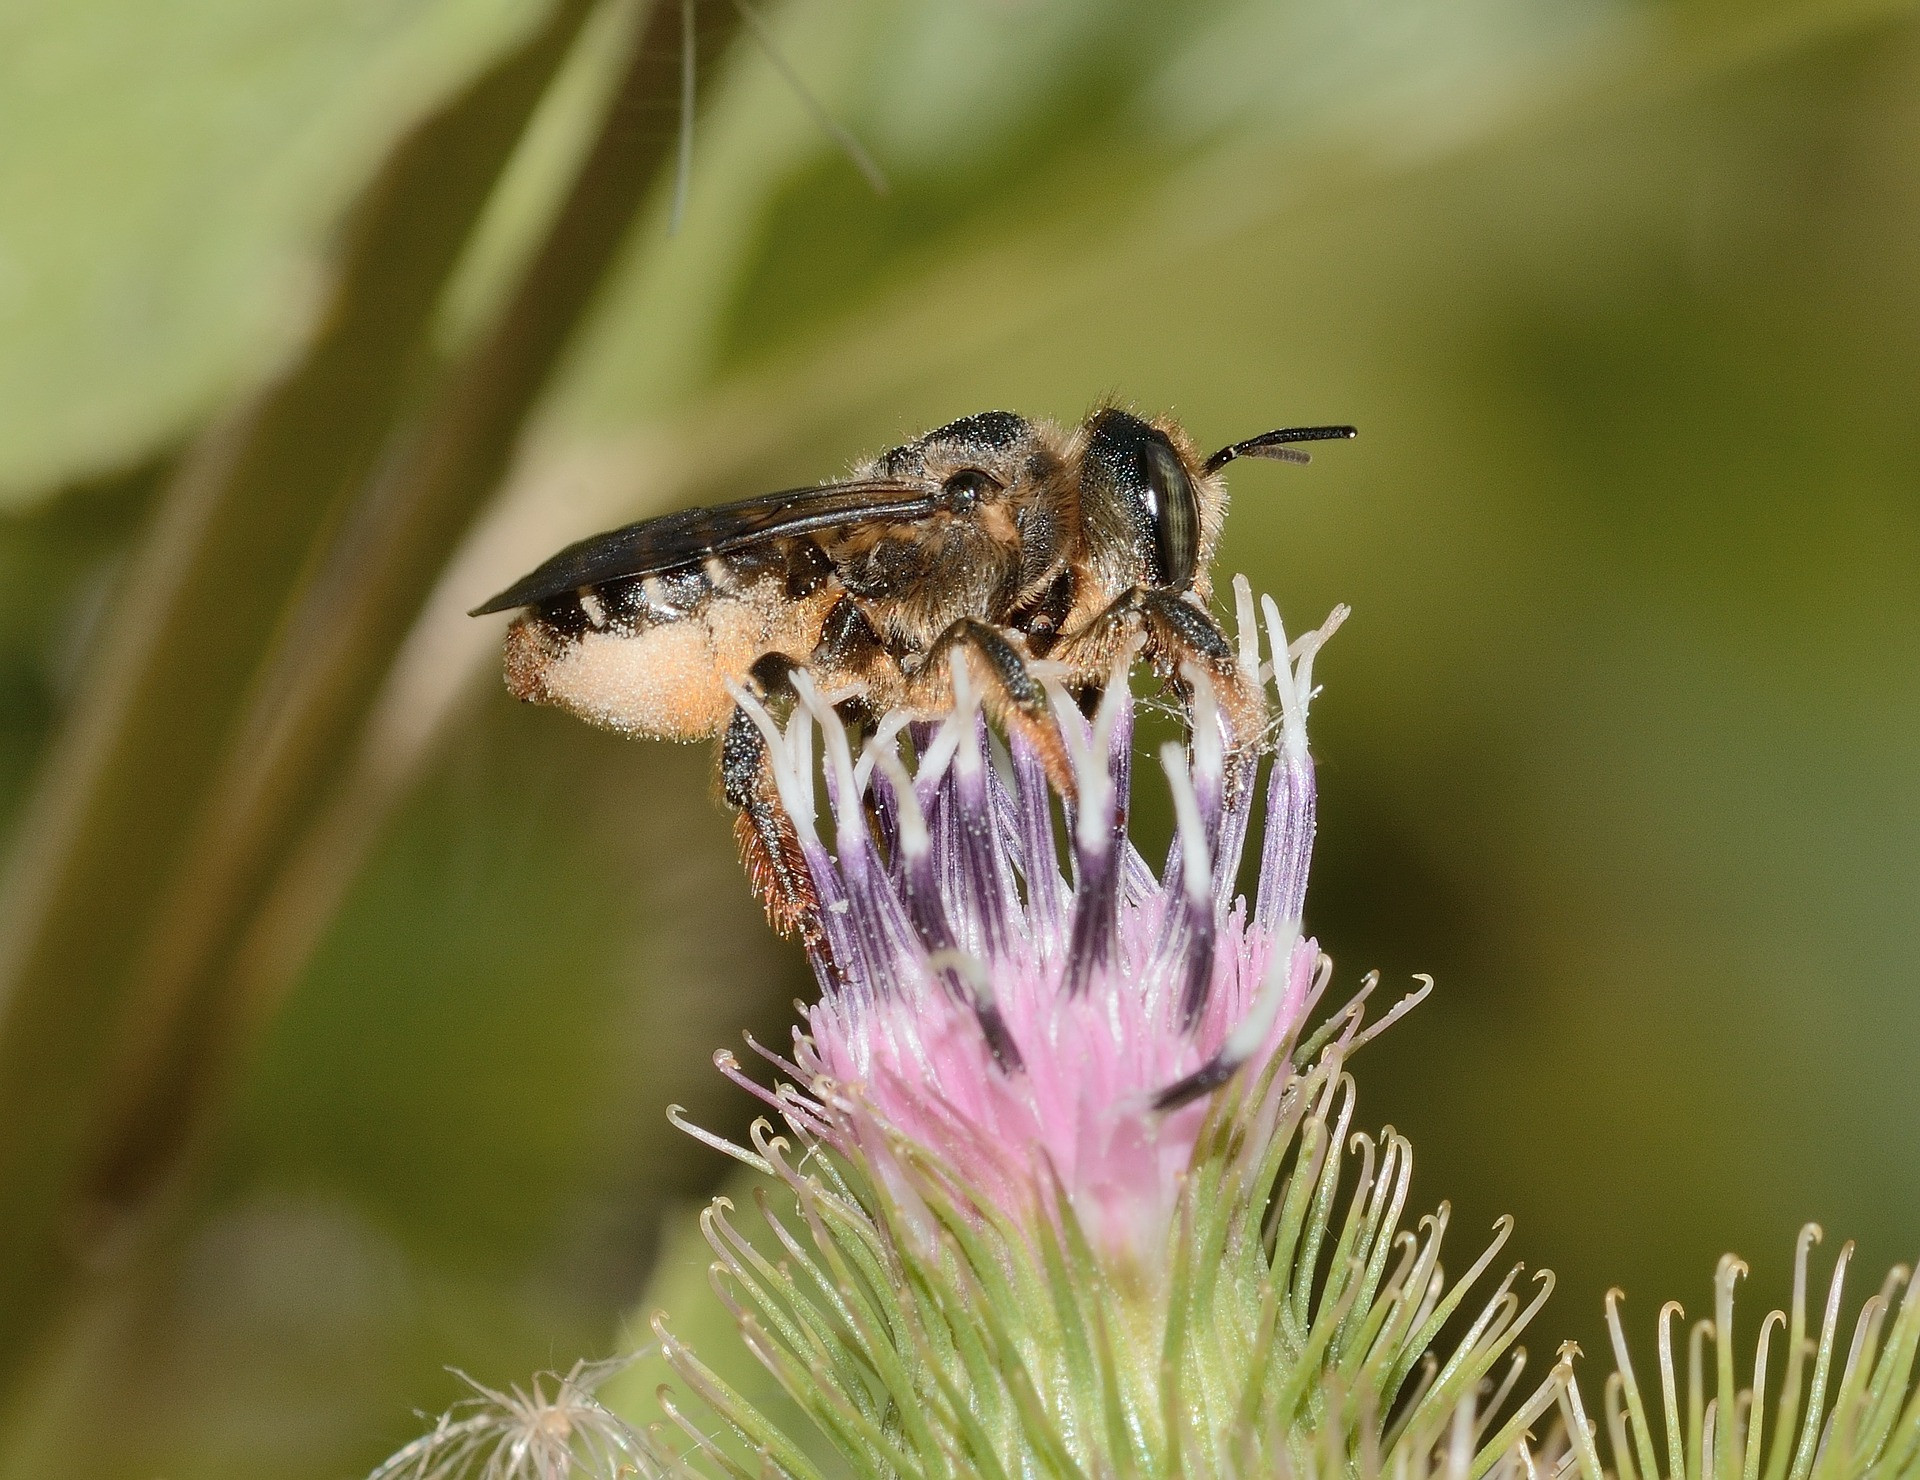 Nationalpark-Donau-Auen-Blattschneiderbiene,FRANCO-PATRIZIA-auf-Pixabay.jpg